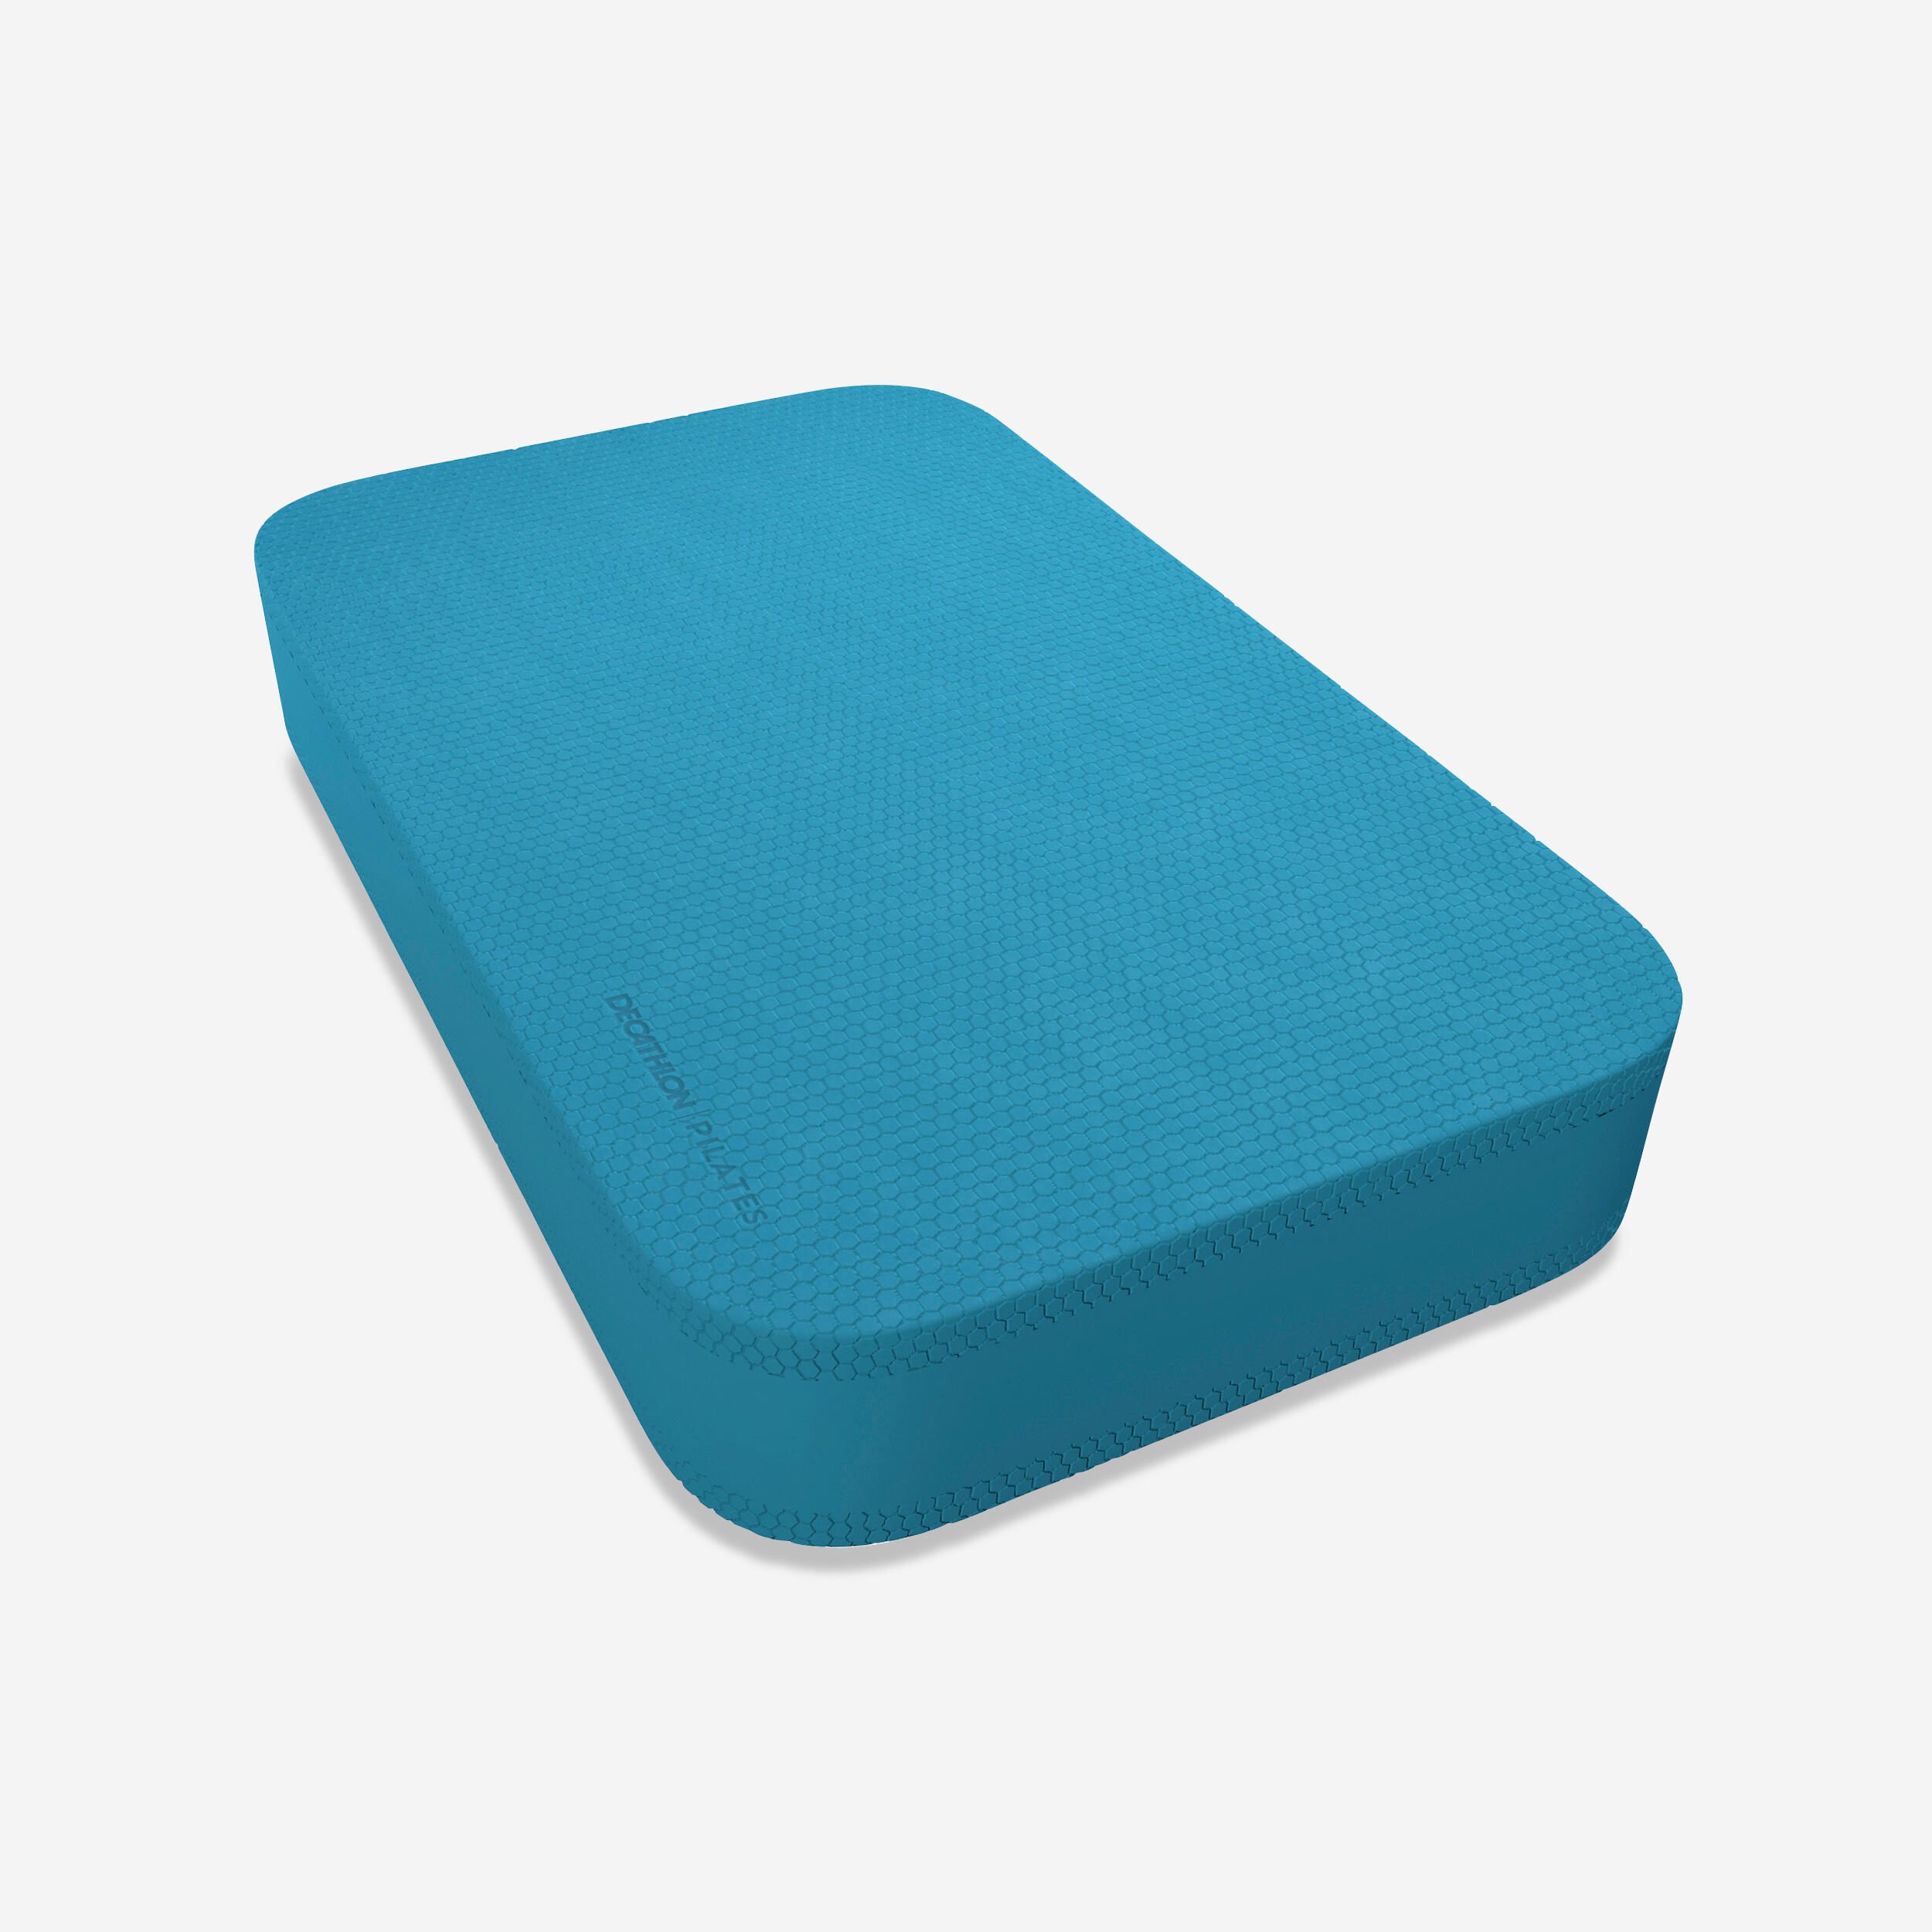 Fitness Small Balance Pad (39 cm x 24 cm x 6 cm) - Blue 1/3